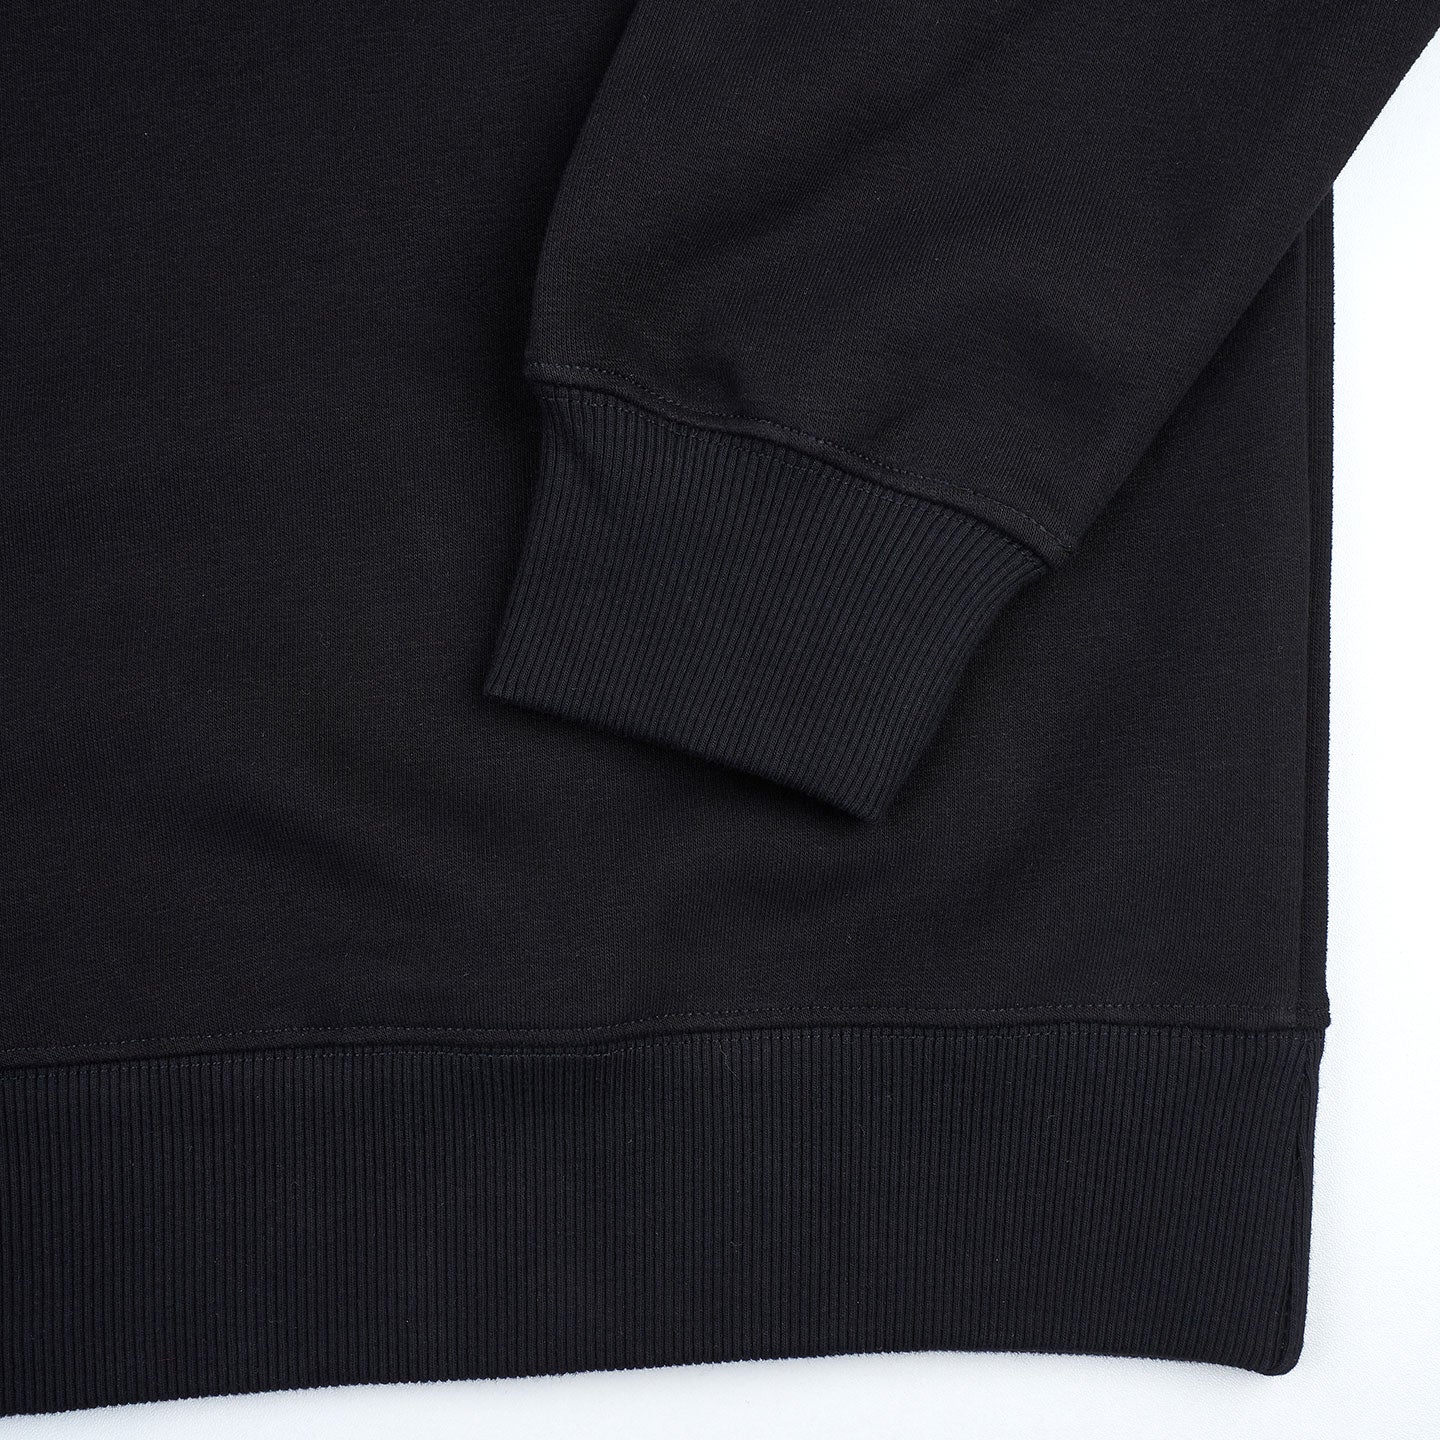 Outset Monochrome Sweatshirt - Black